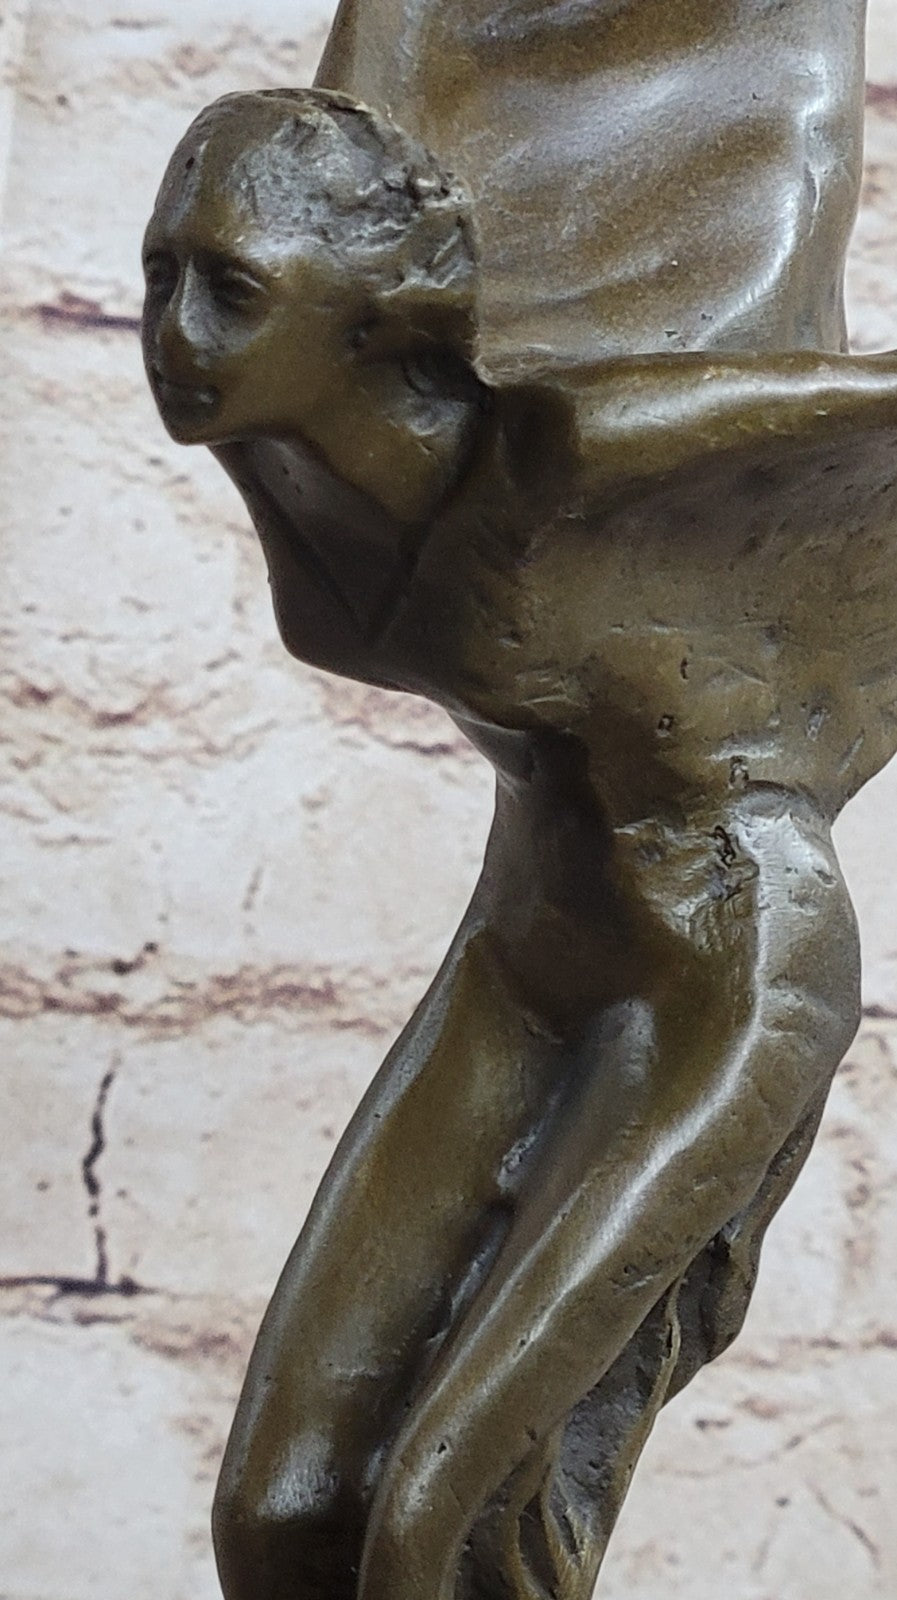 Spirit of Ecstasy Large bronze with brown patina mounted on dark marble base